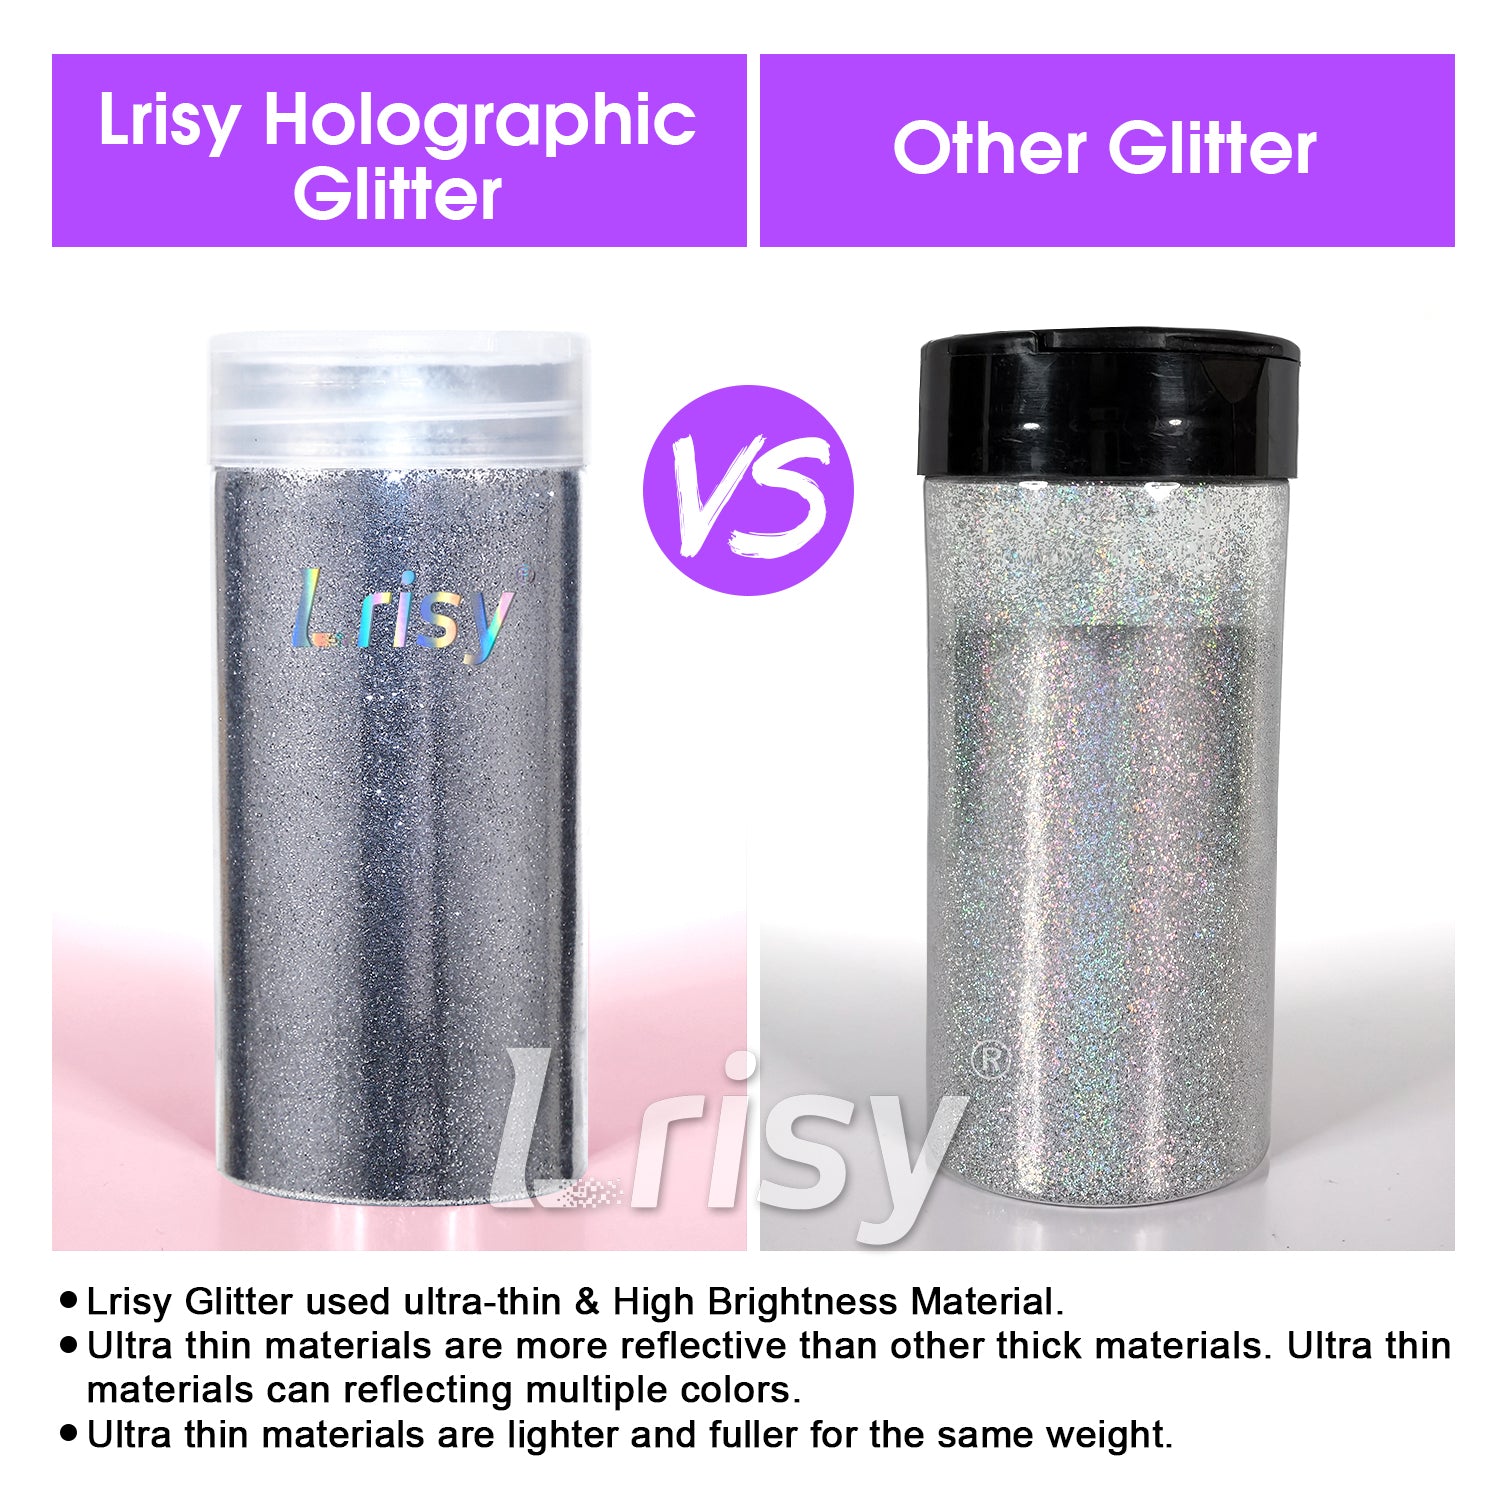 Lrisy Iridescent Extra Fine Glitter Powder with Shaker Lid 140g/4.5oz (Ultra Thin Iridescent Dream Blue/FC321)